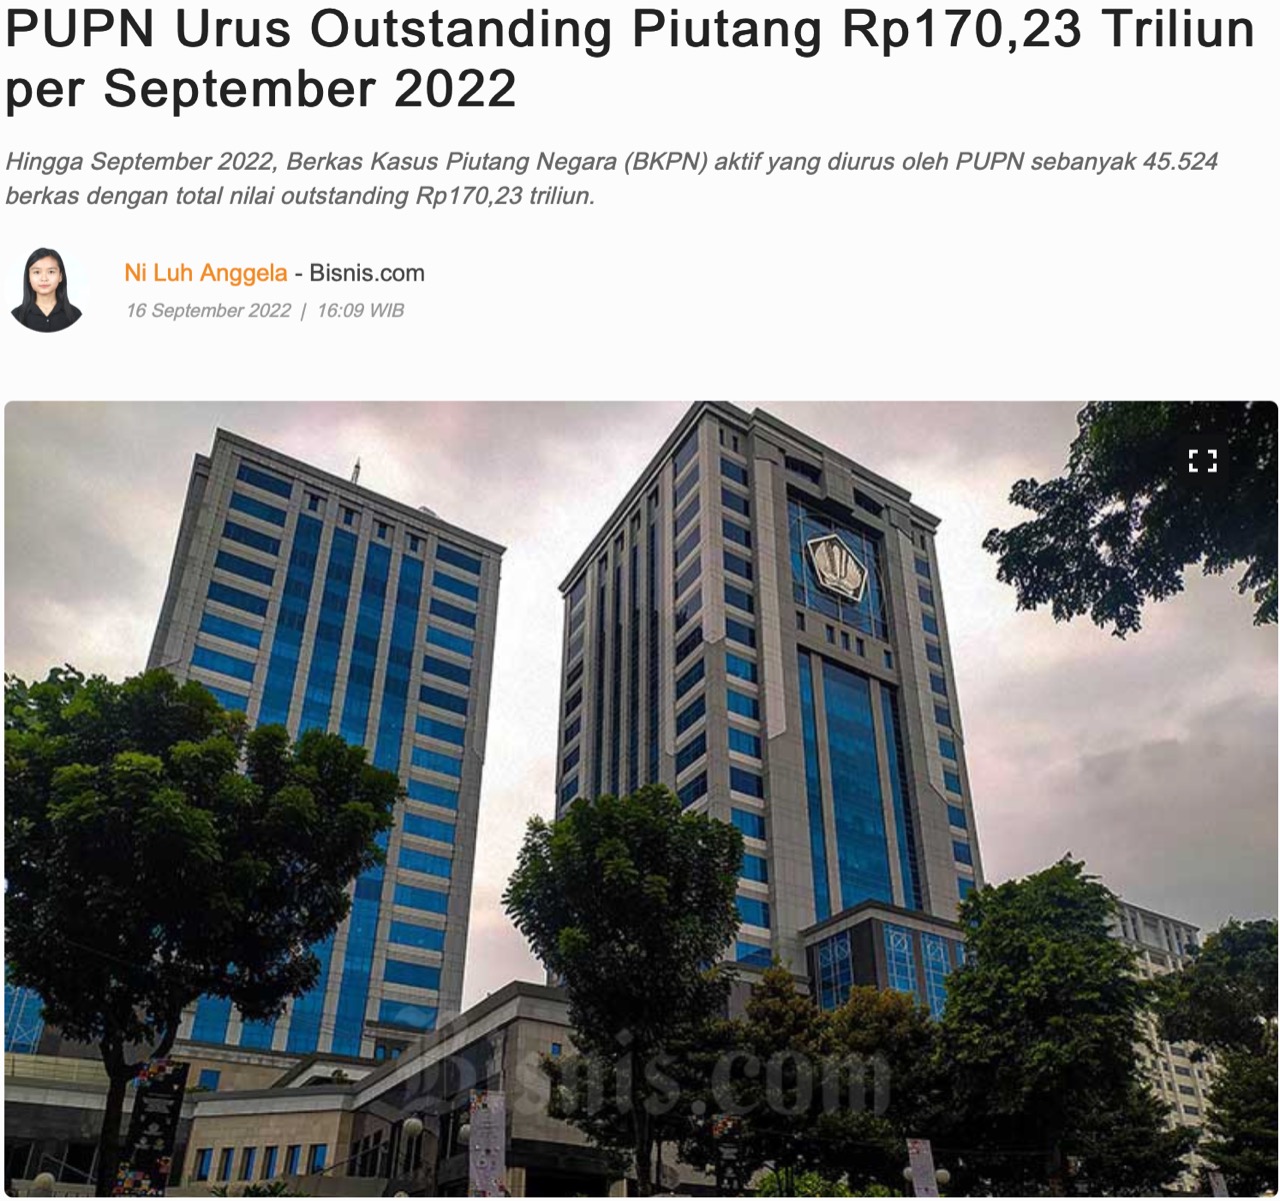 PUPN Urus Outstanding Piutang Rp170,23 Triliun per September 2022